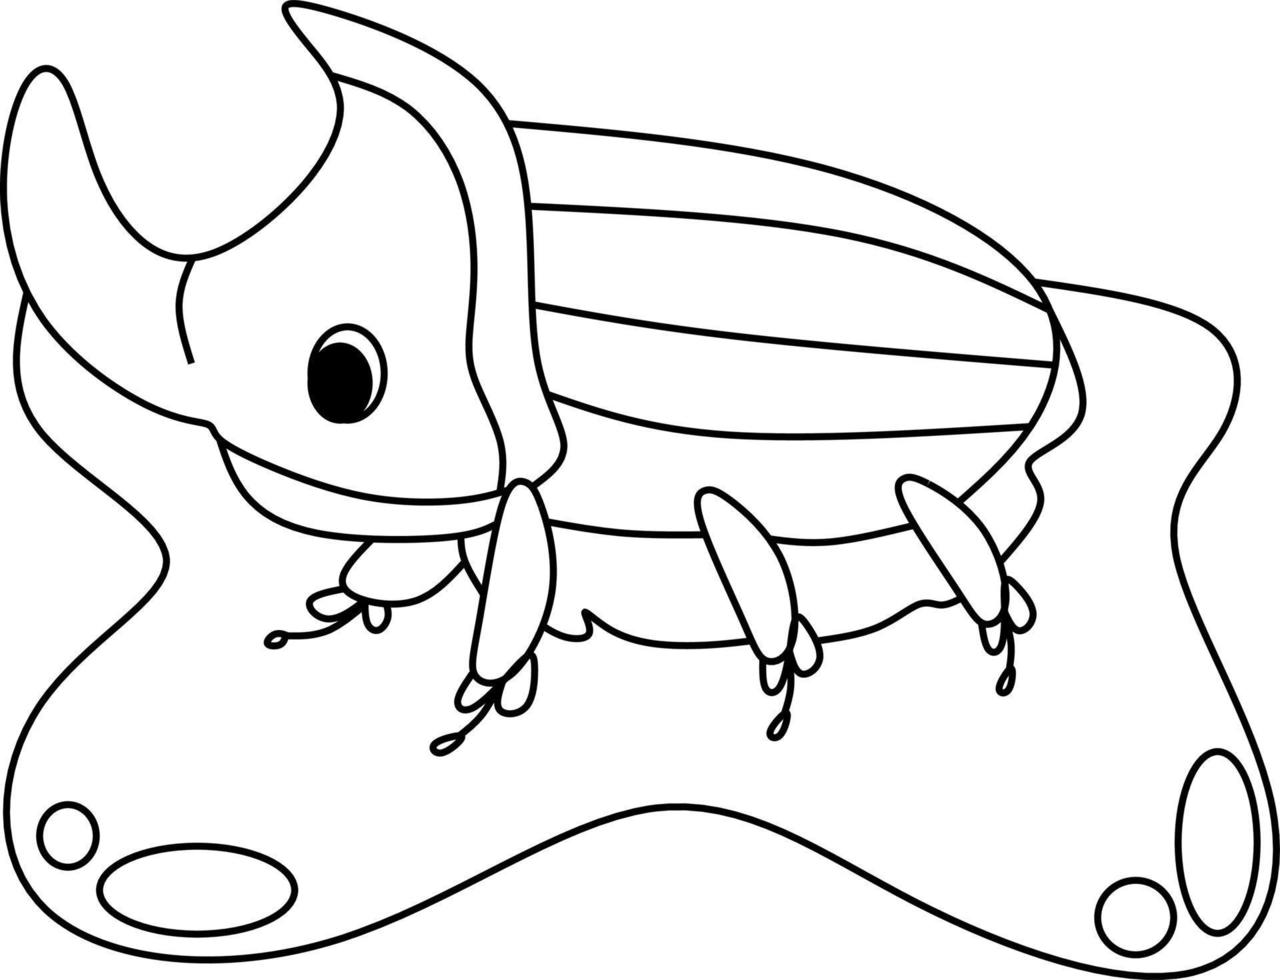 coloring page alphabets animal cartoon beetle vector